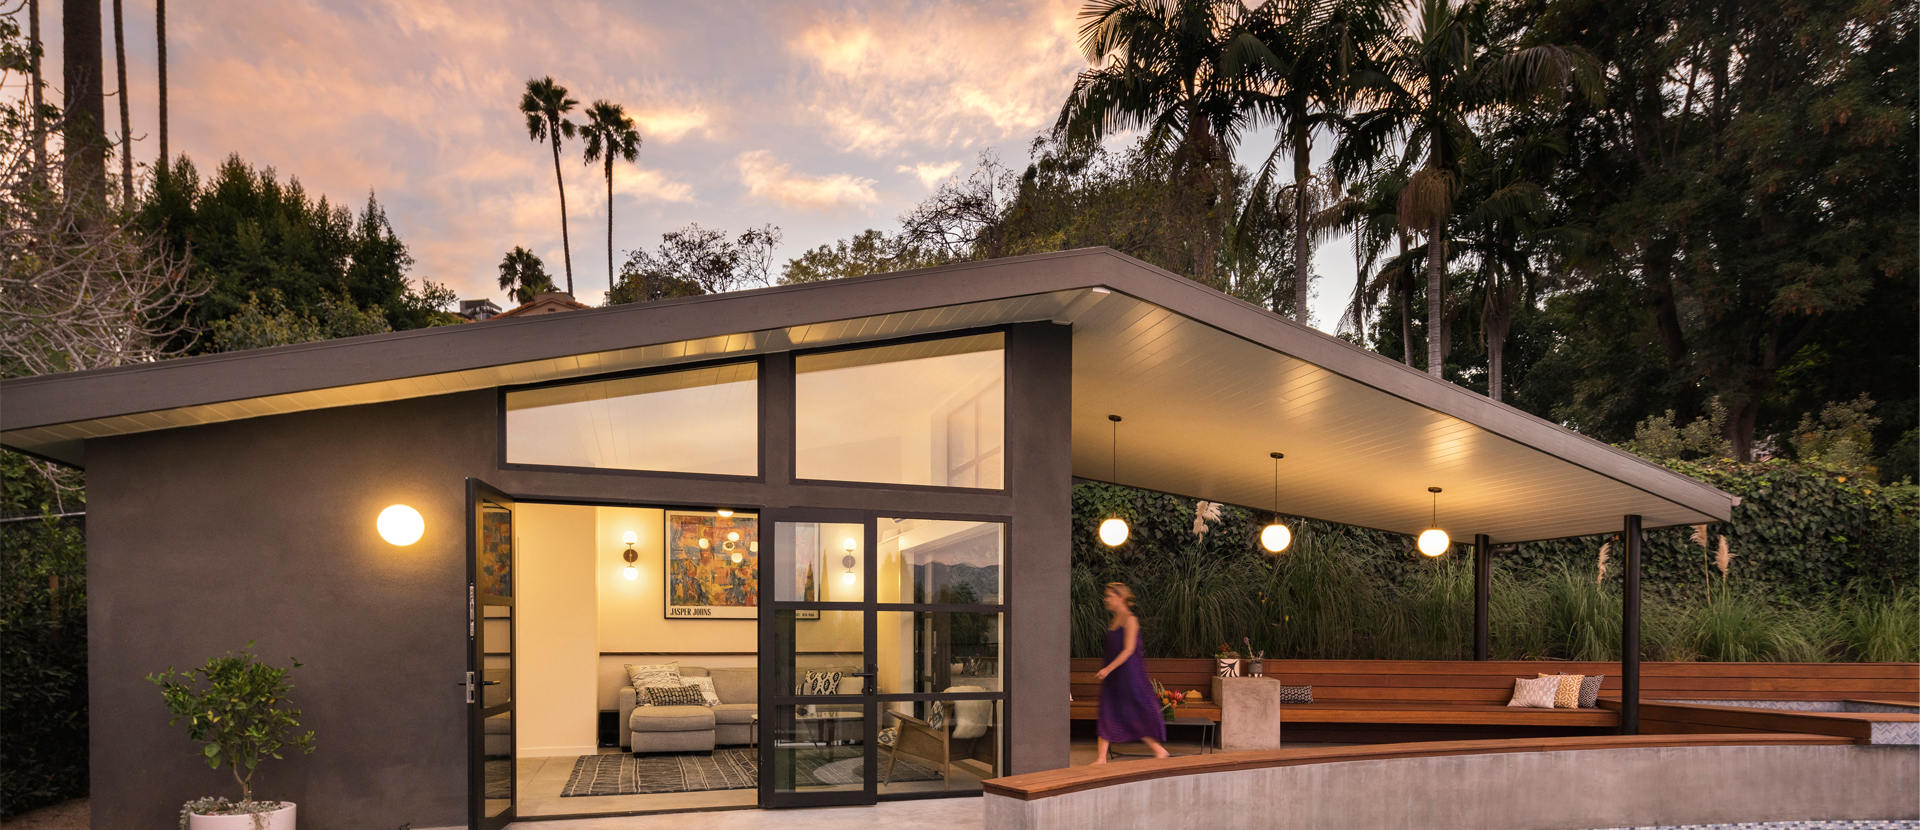 008-los-feliz-pool-house-california-fleetwood-sliding-door-modern-globe-lighting